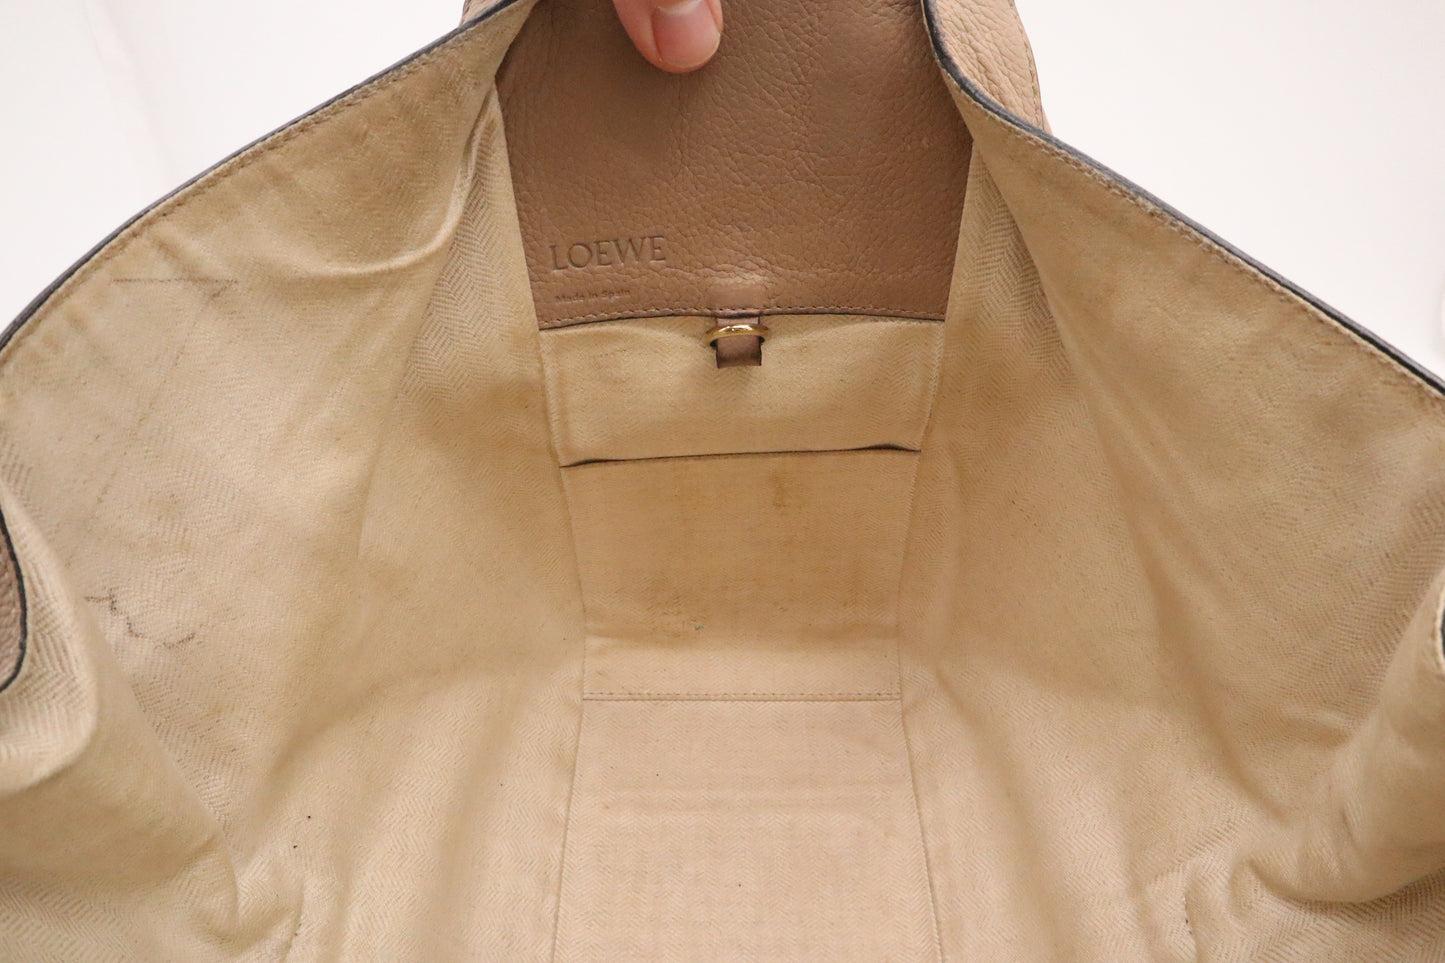 LOEWE Small Hammock Bag in Sand Leather